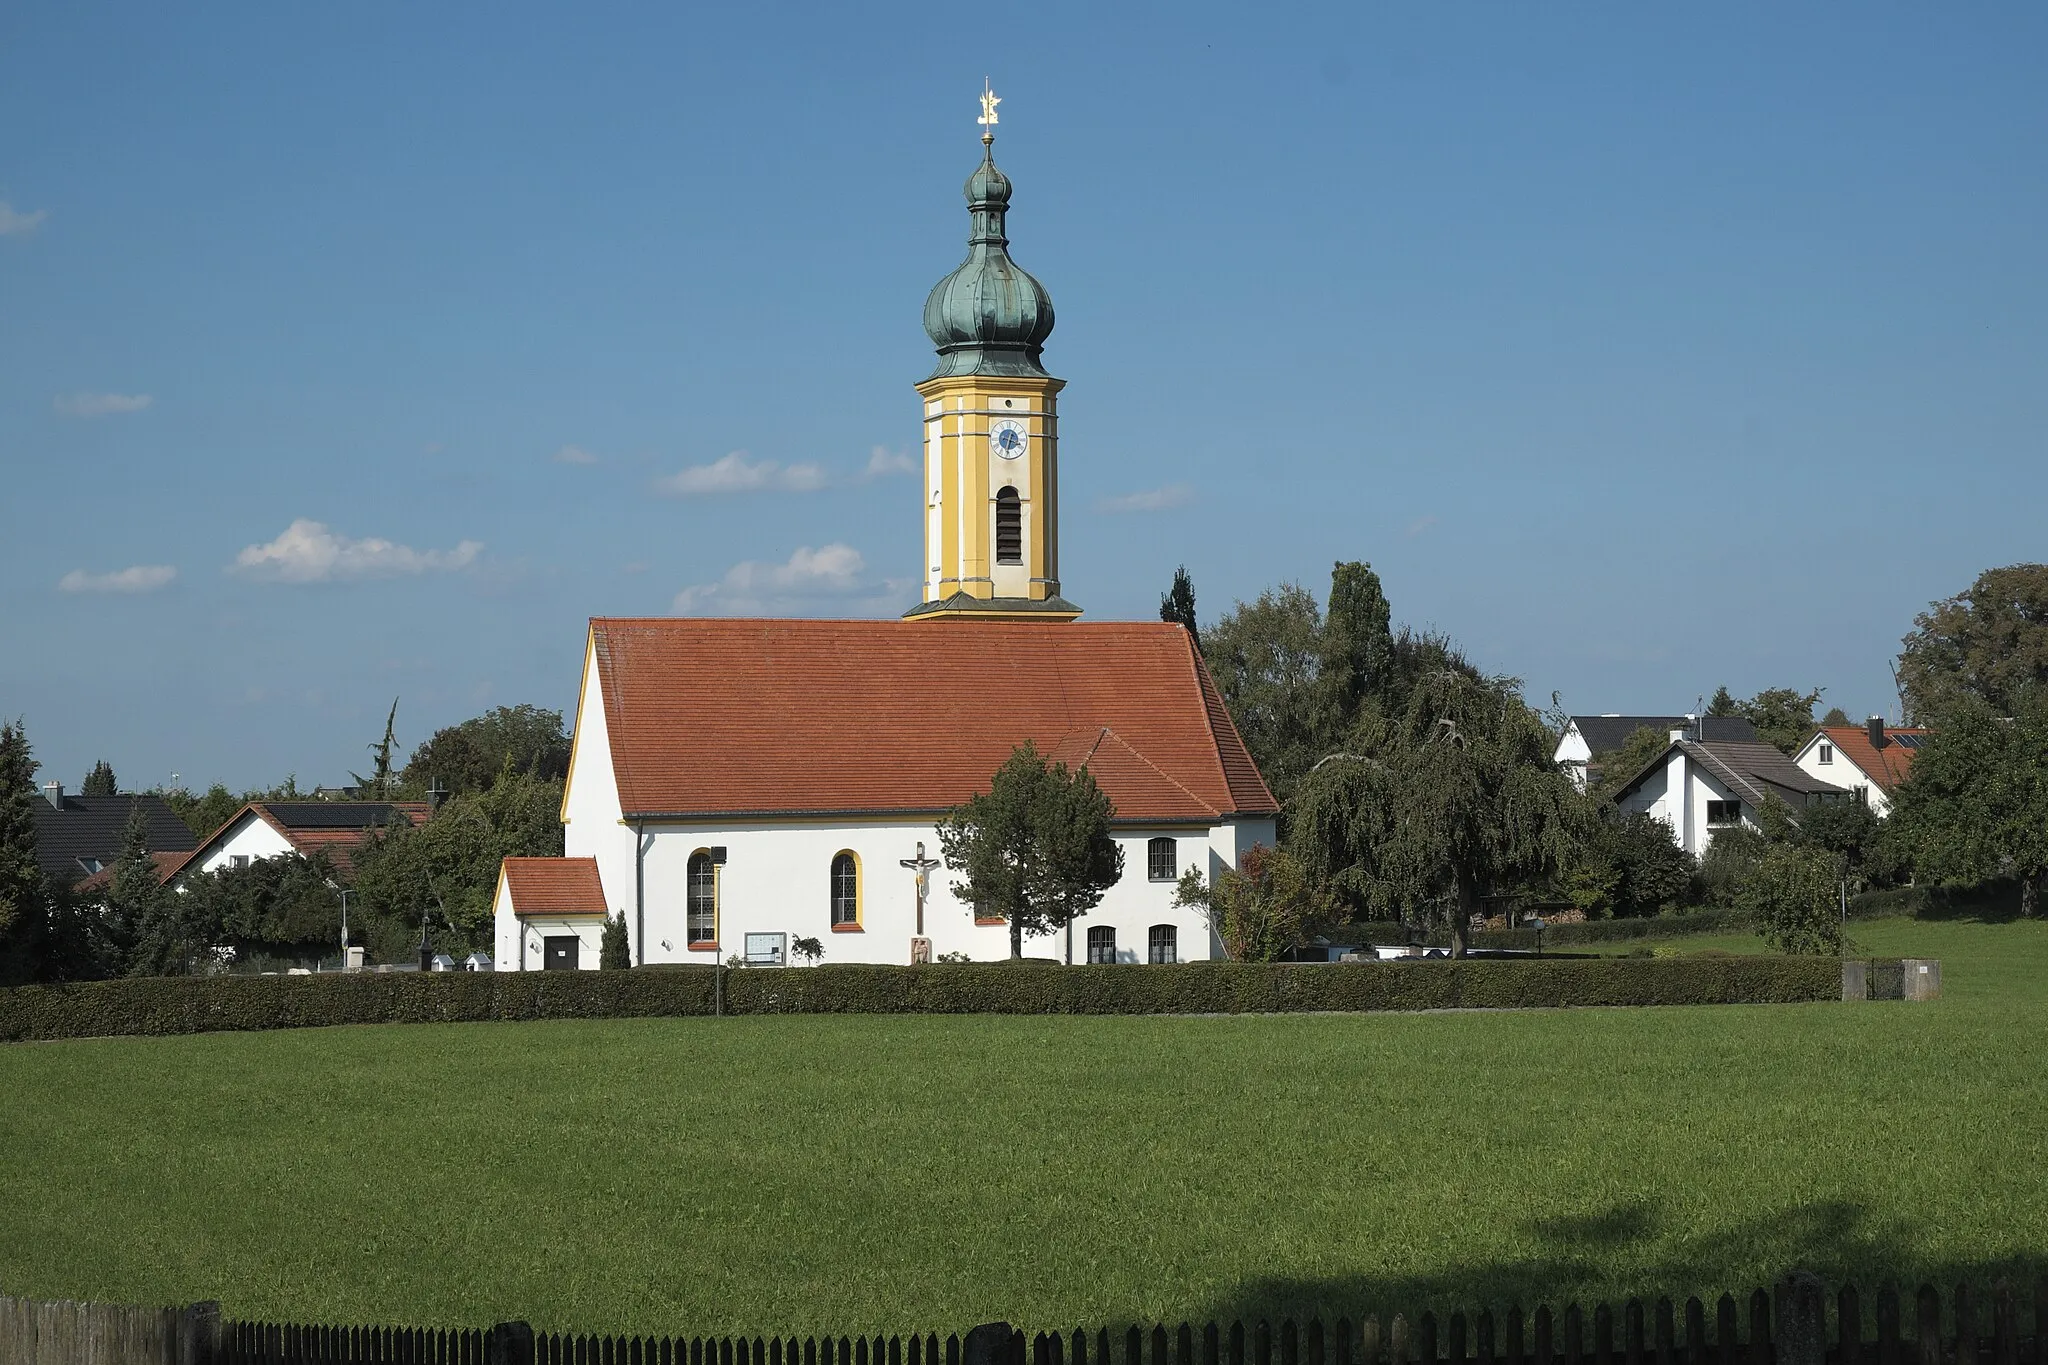 Image of Oberbayern